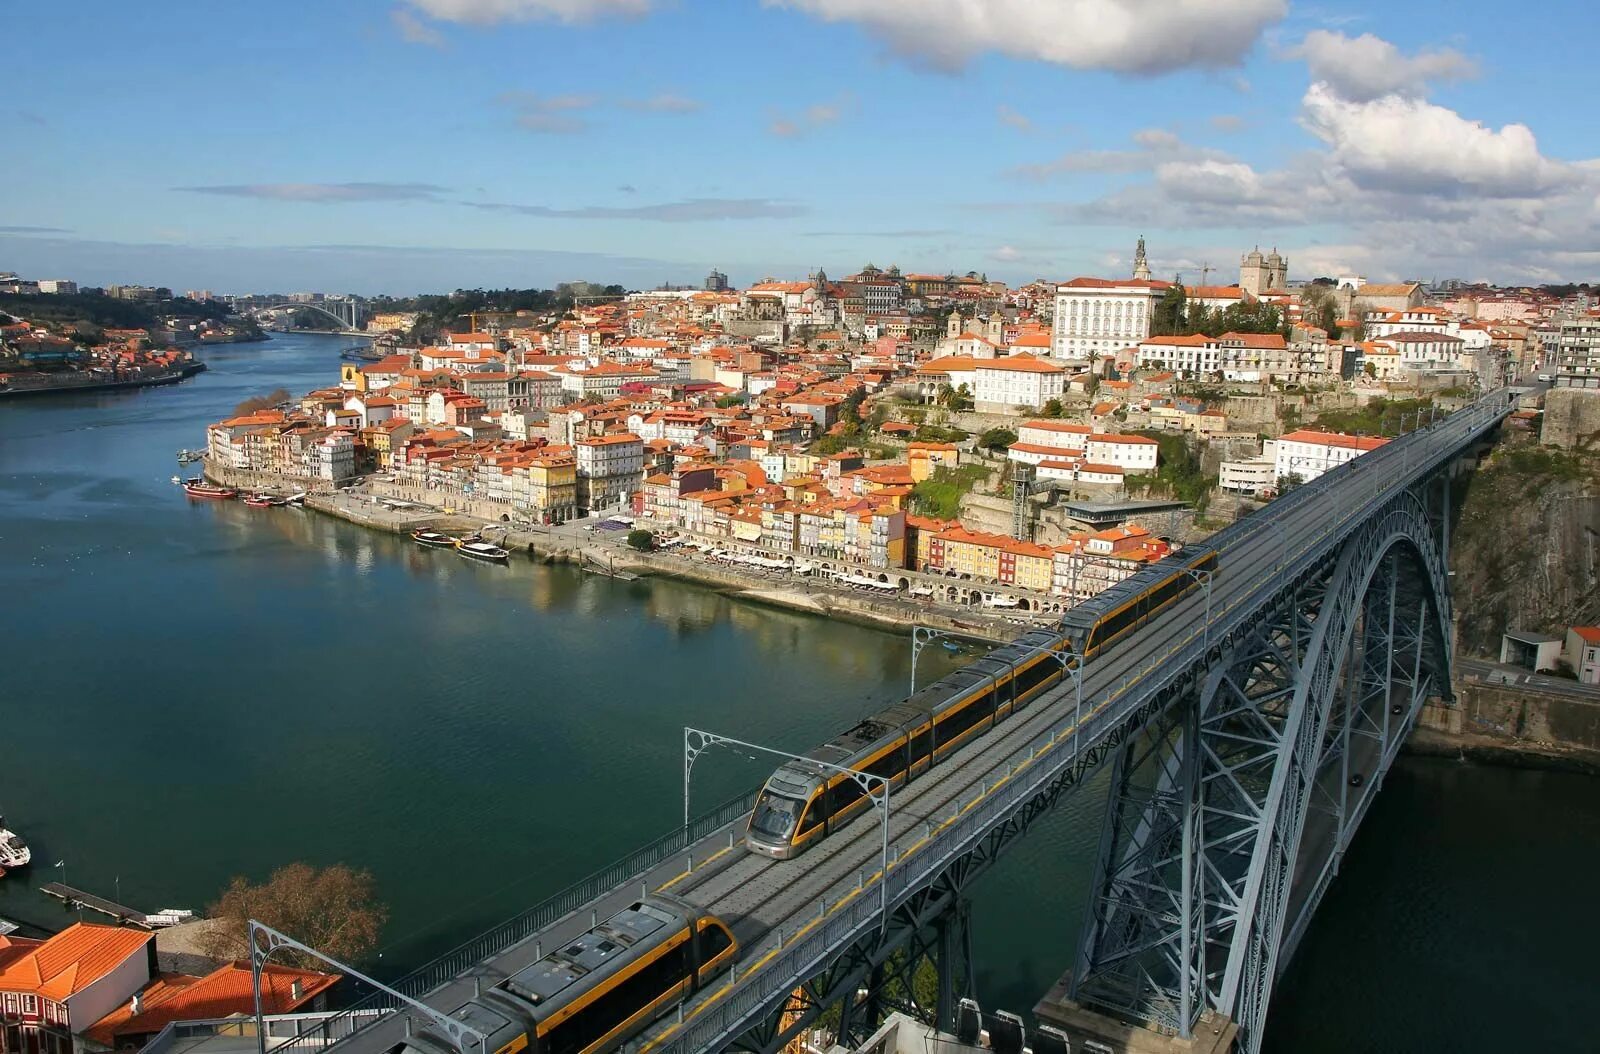 Площадь города порту. Мост в Порто Португалия. Португалия мост Луиша. Сан Мартинью Ду порту Португалия. Мост в оплртопортугалия 1870е).